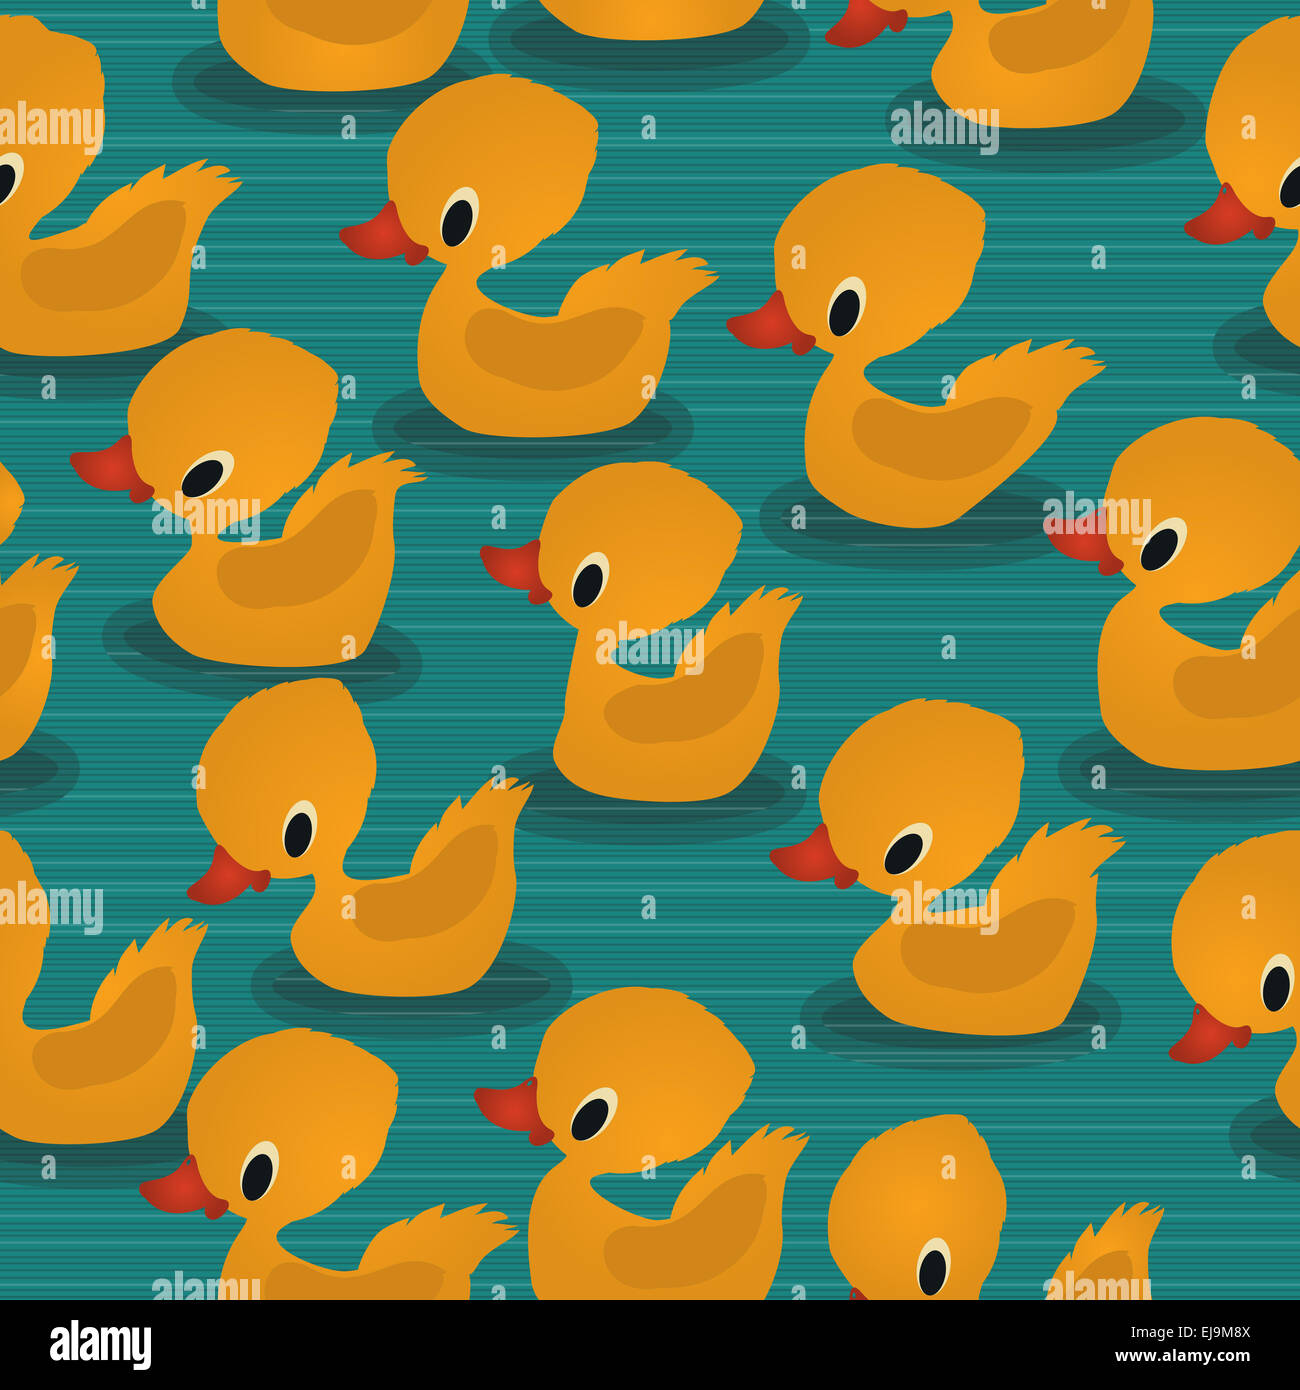 Baby ducks pattern Stock Photo